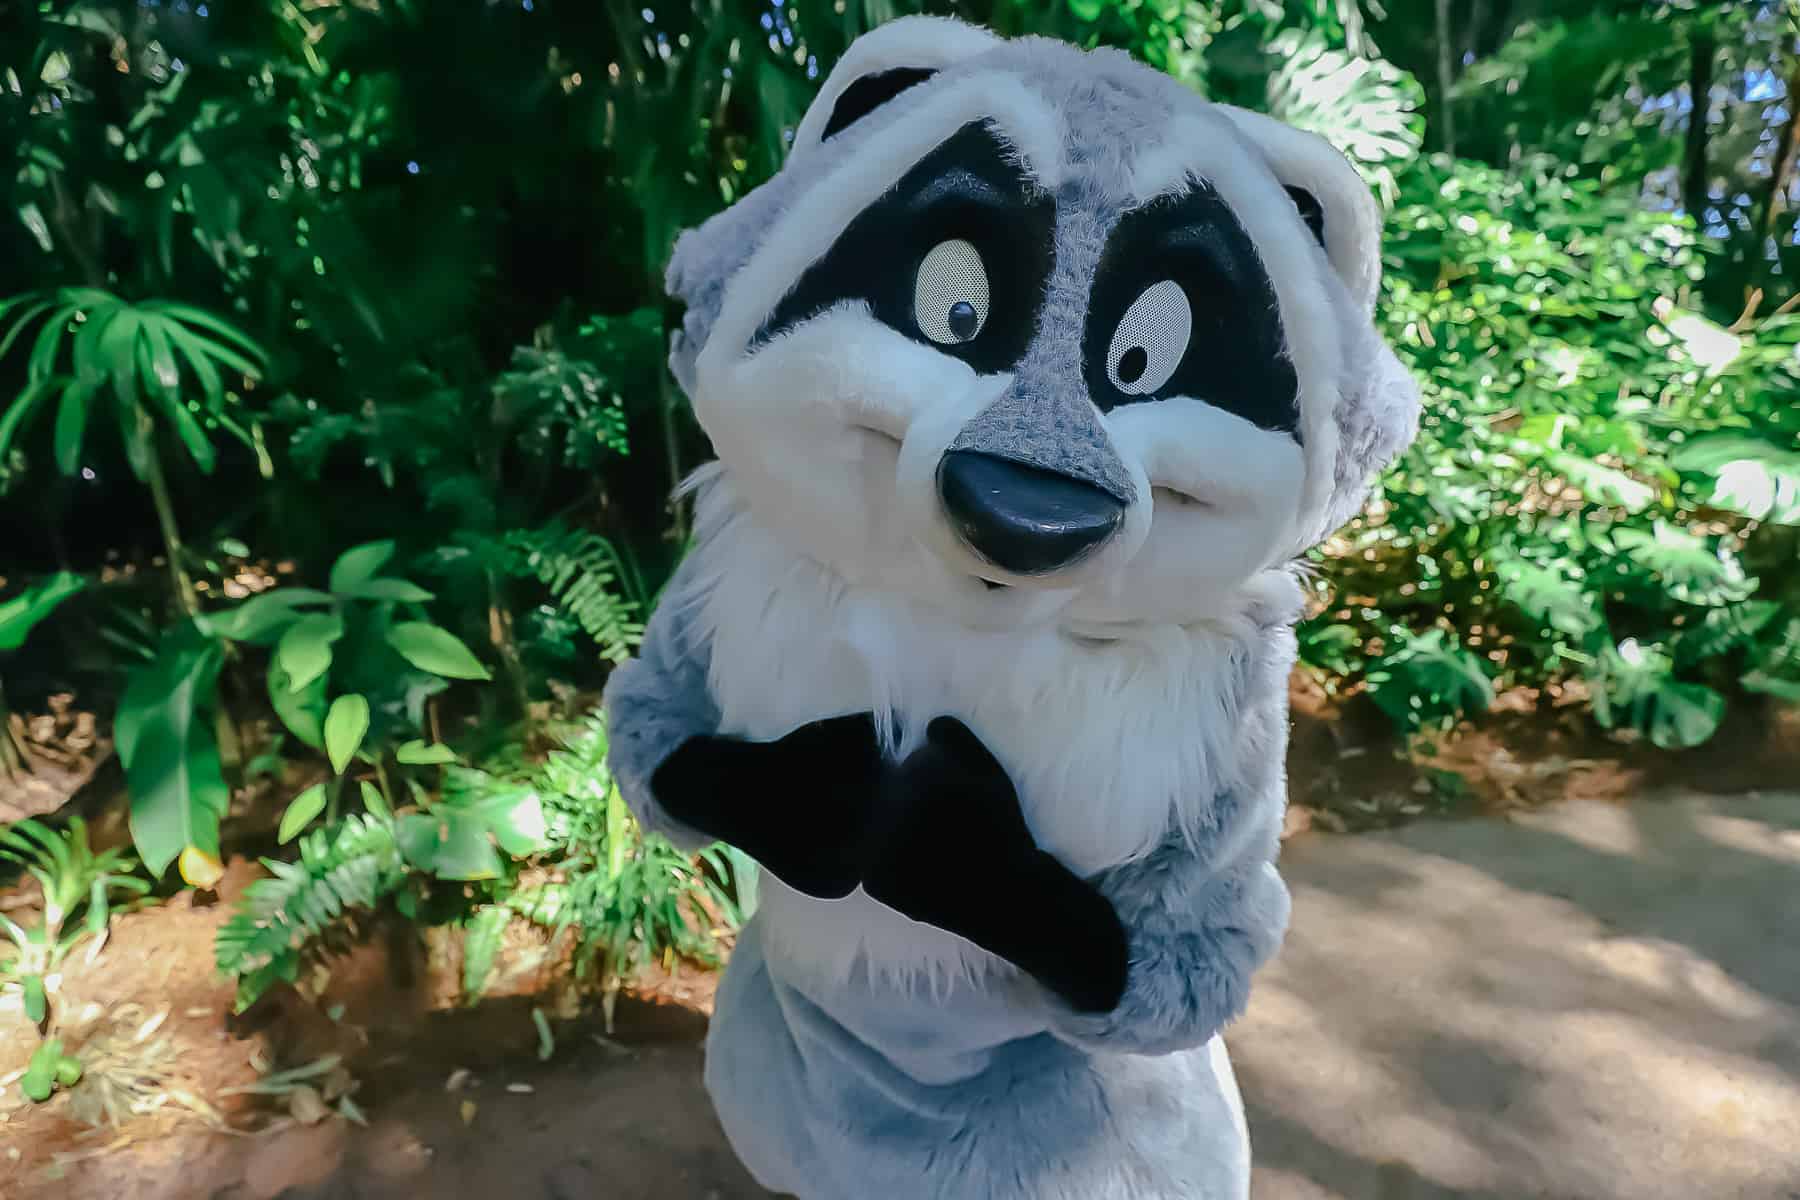 Meet Meeko at Disney’s Animal Kingdom